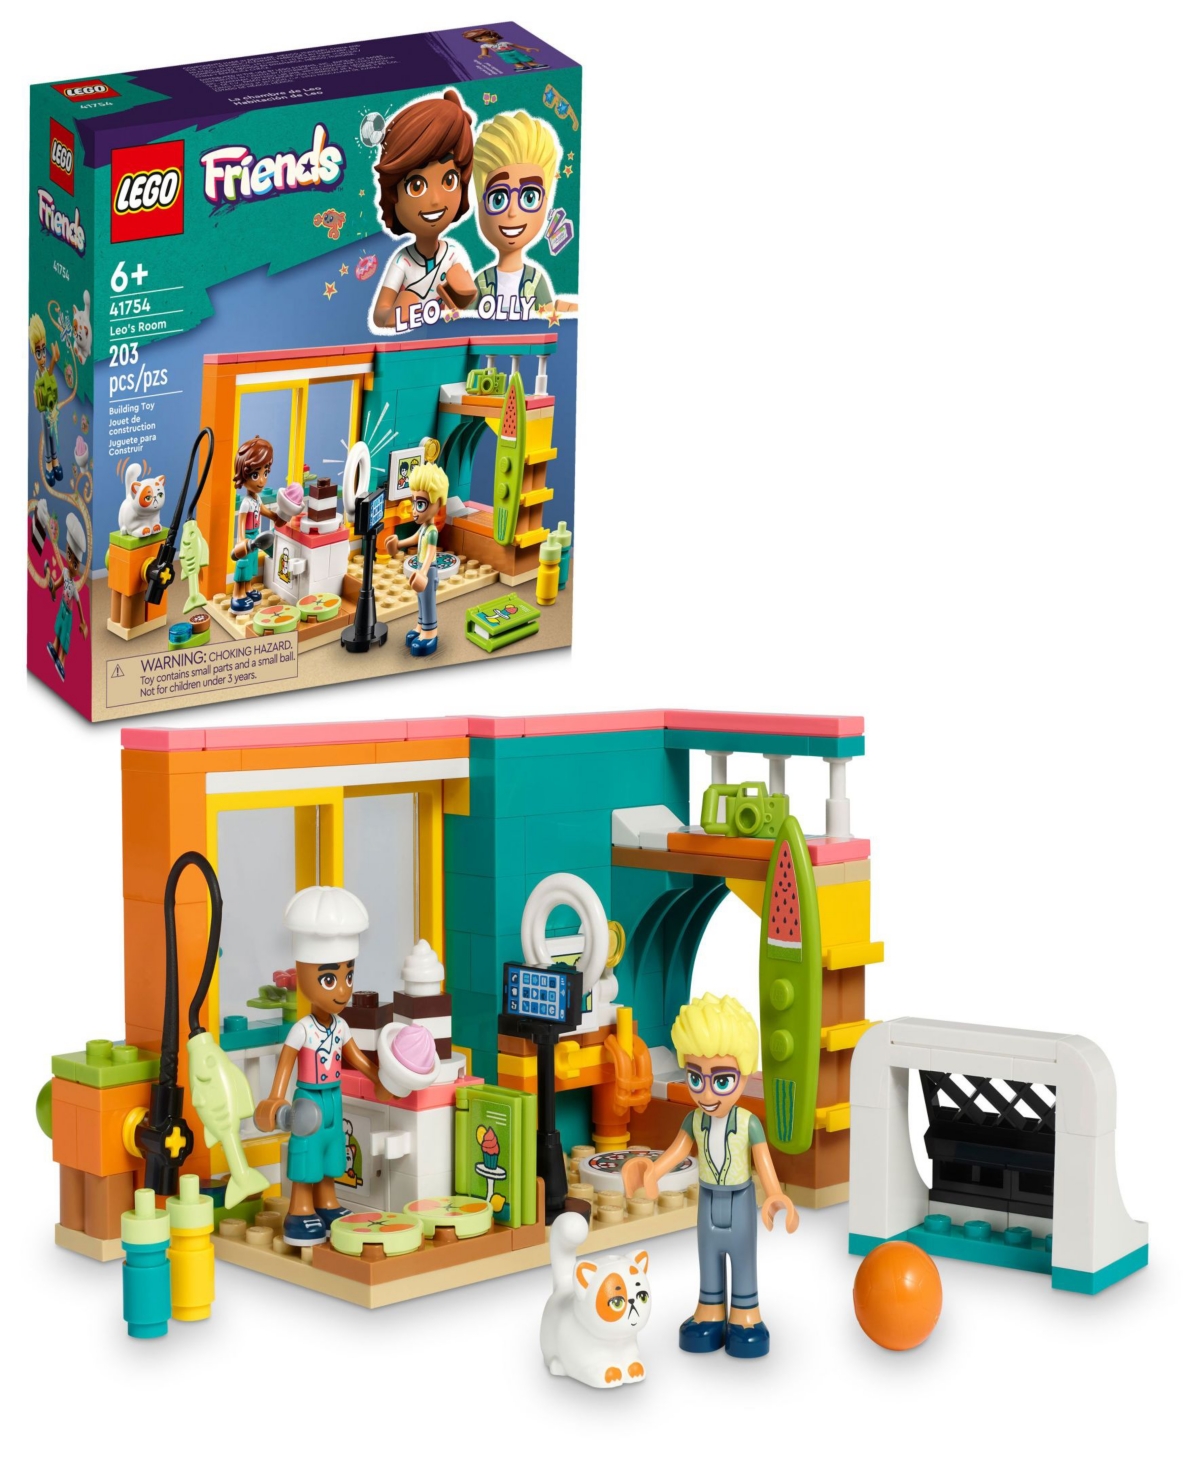 Lego Babies' Friends Leo's Room 41754 Building Toy Set, 203 Pieces In Multicolor